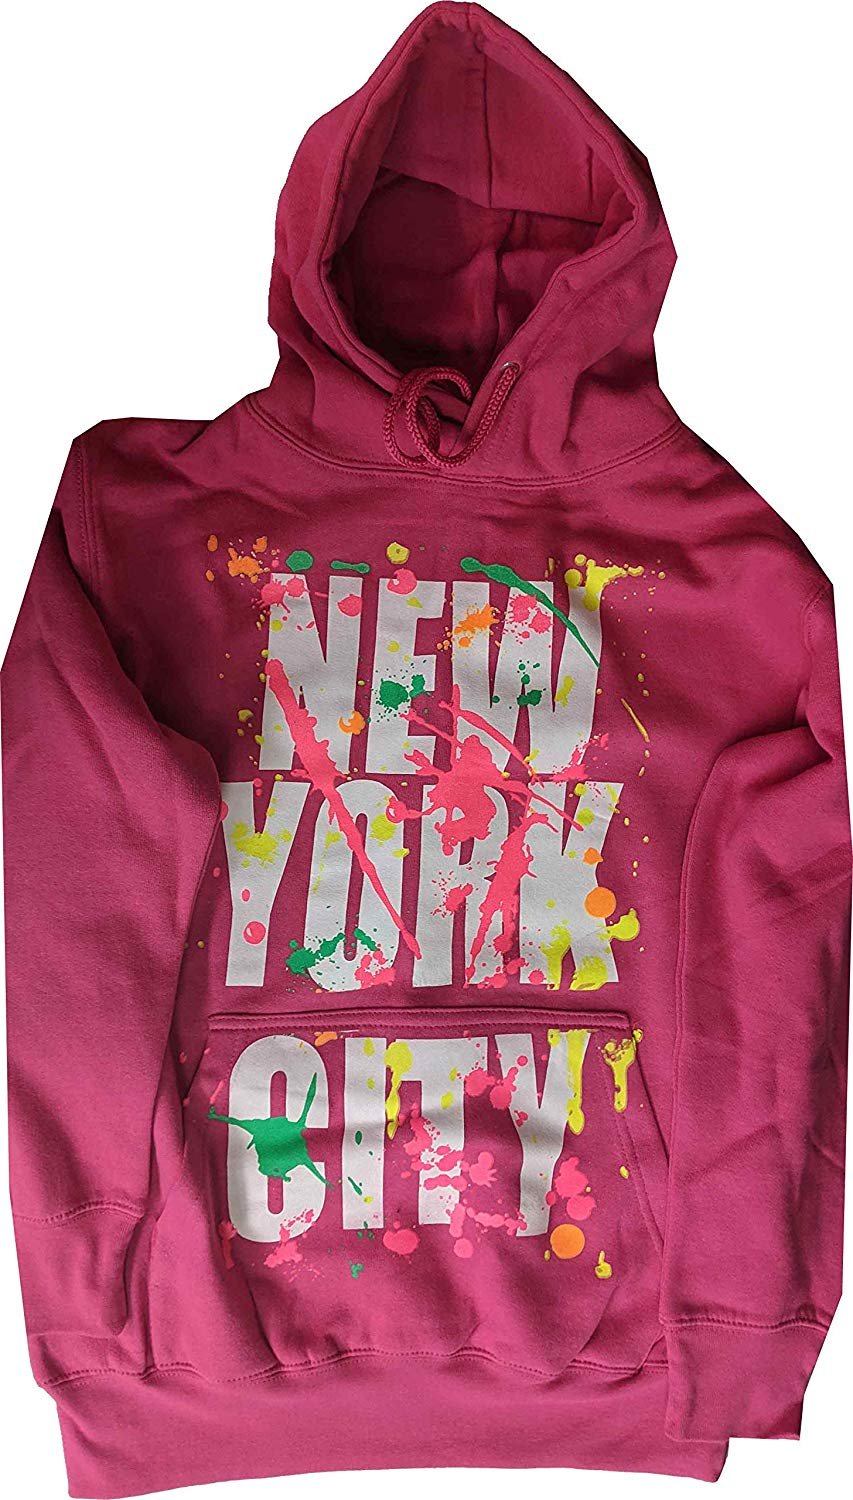 New York Paint Splash Hoodie Sweatshirt Adult Unisex Hot Pink